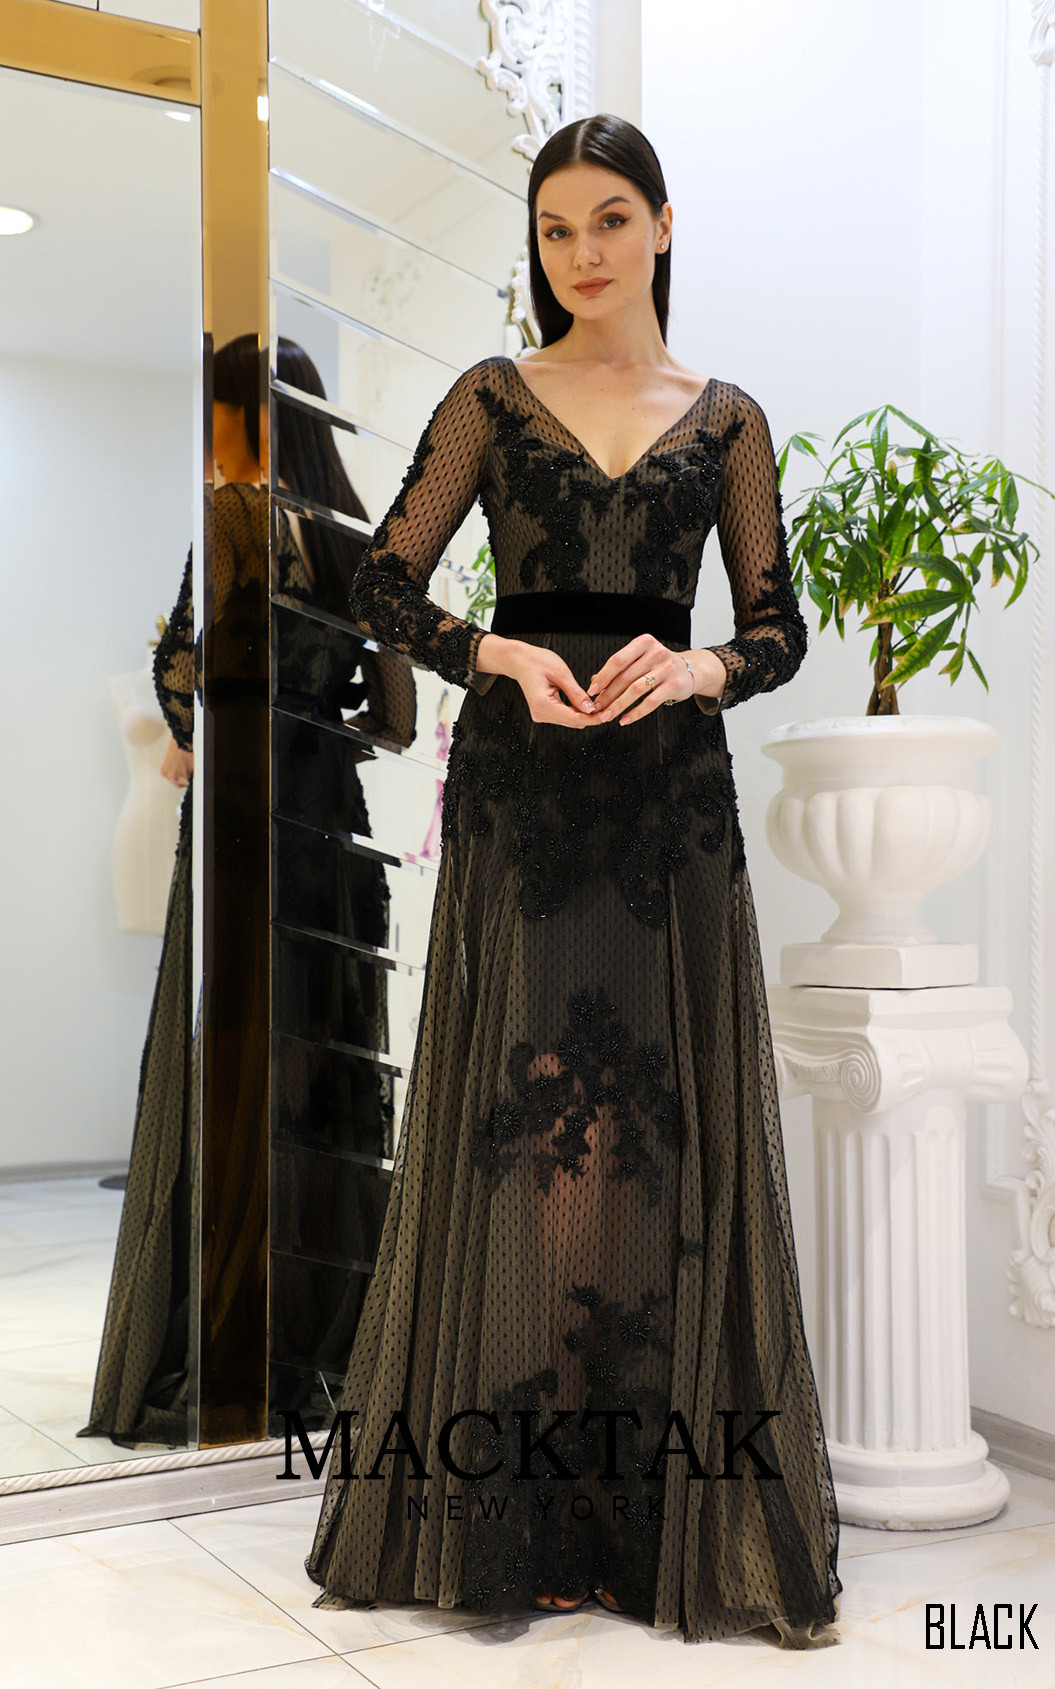 MackTak Couture 50210 Dress